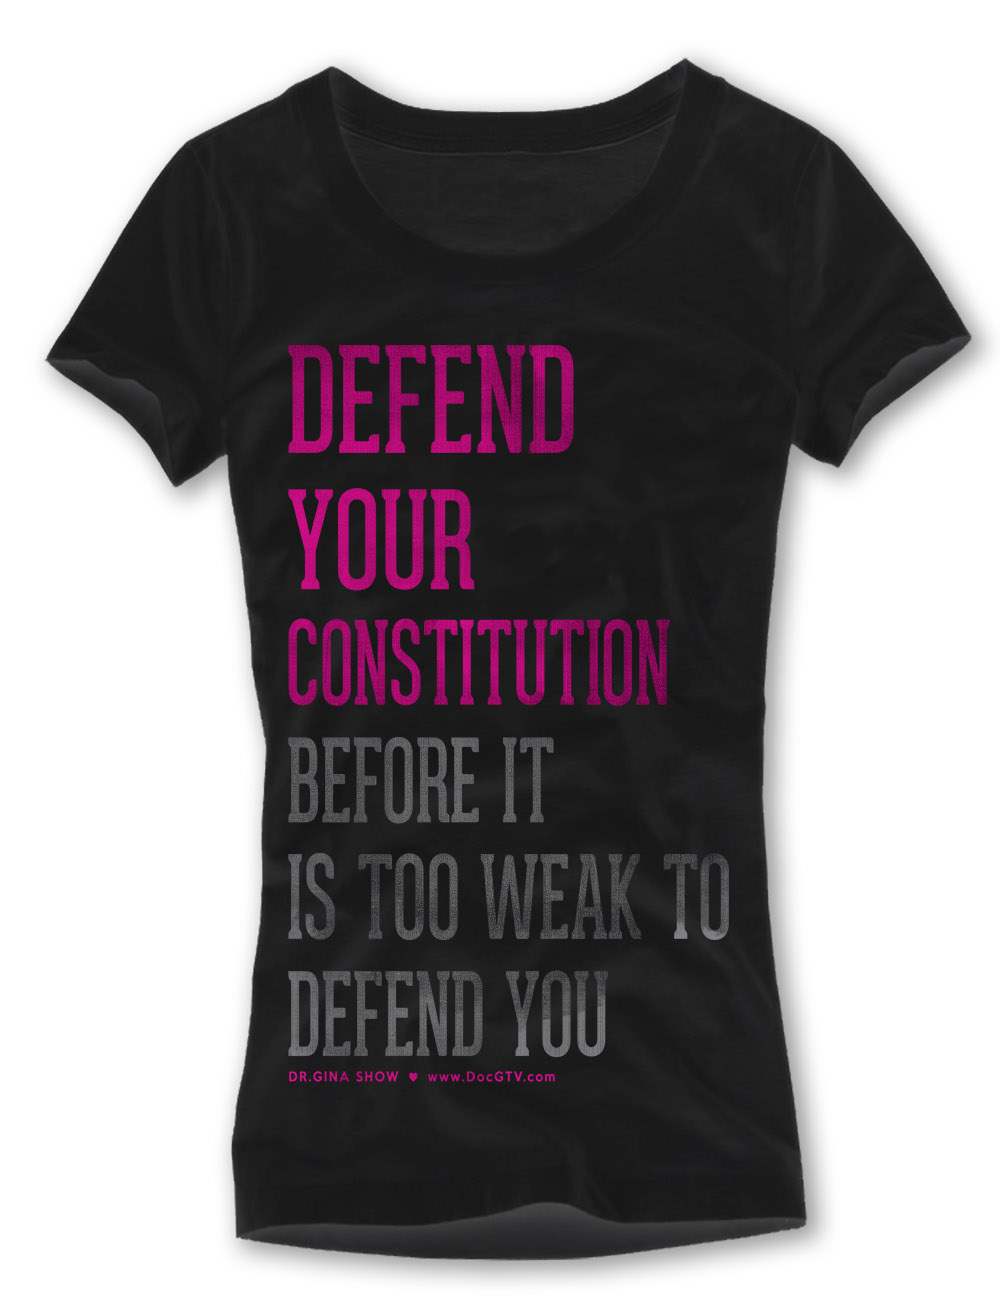 Defend Your Constitution